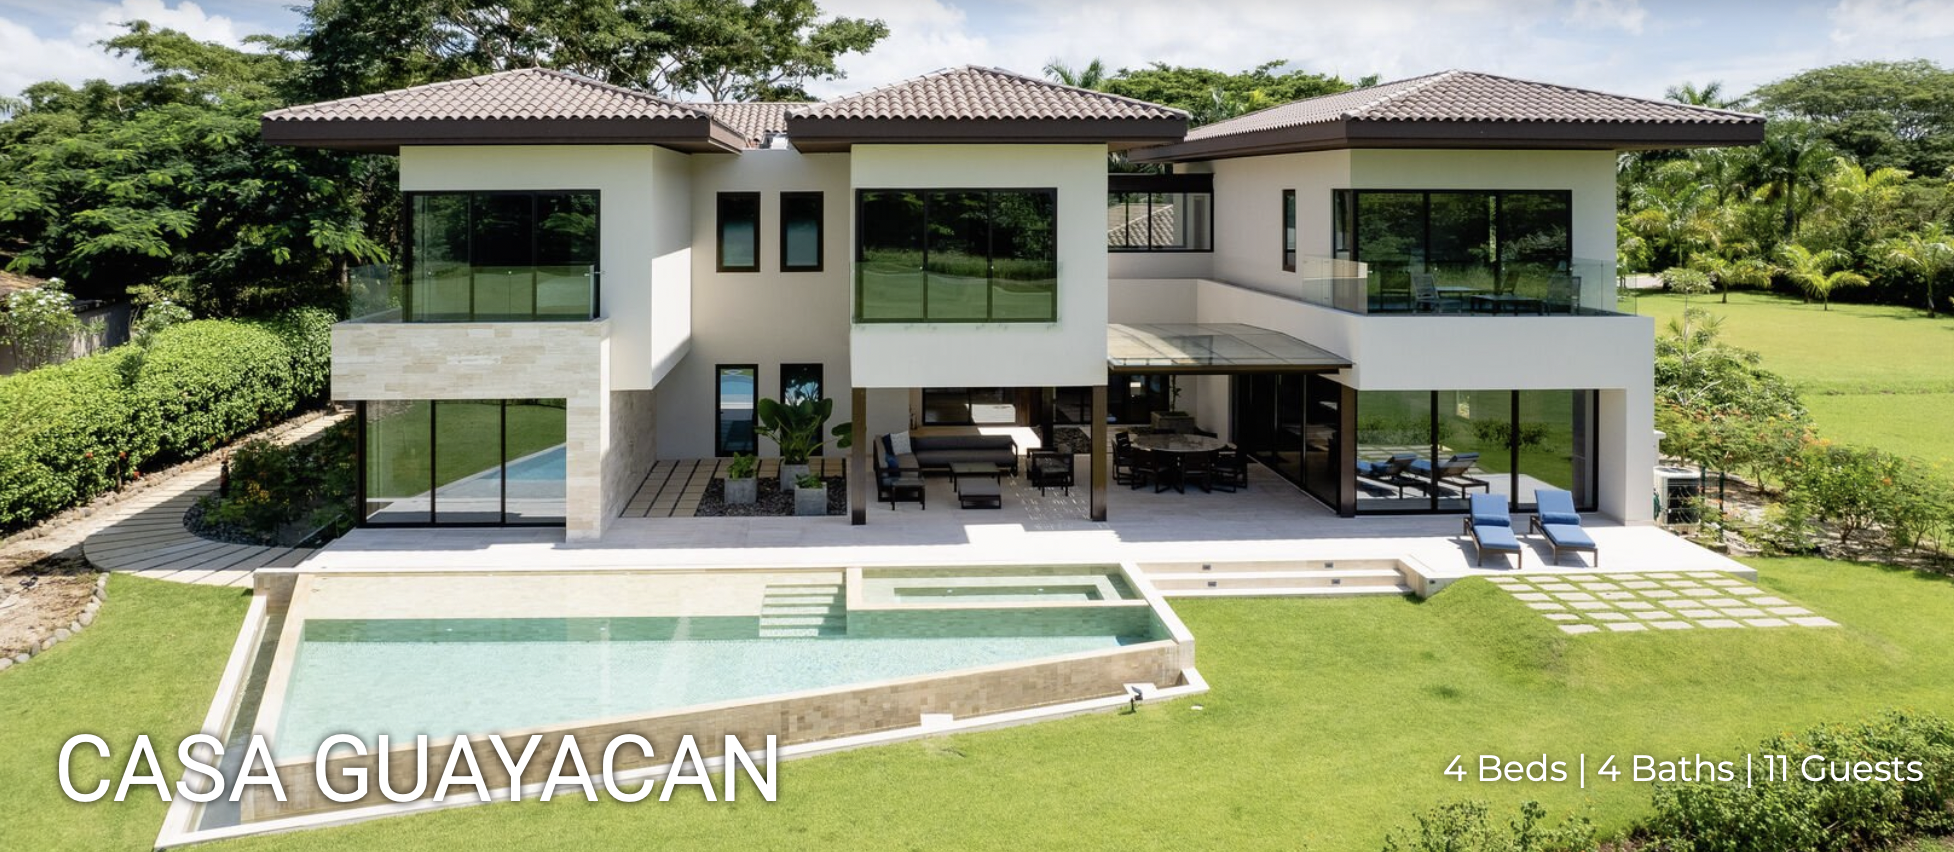 Casa Guayacan family vacation rental in Costa Rica